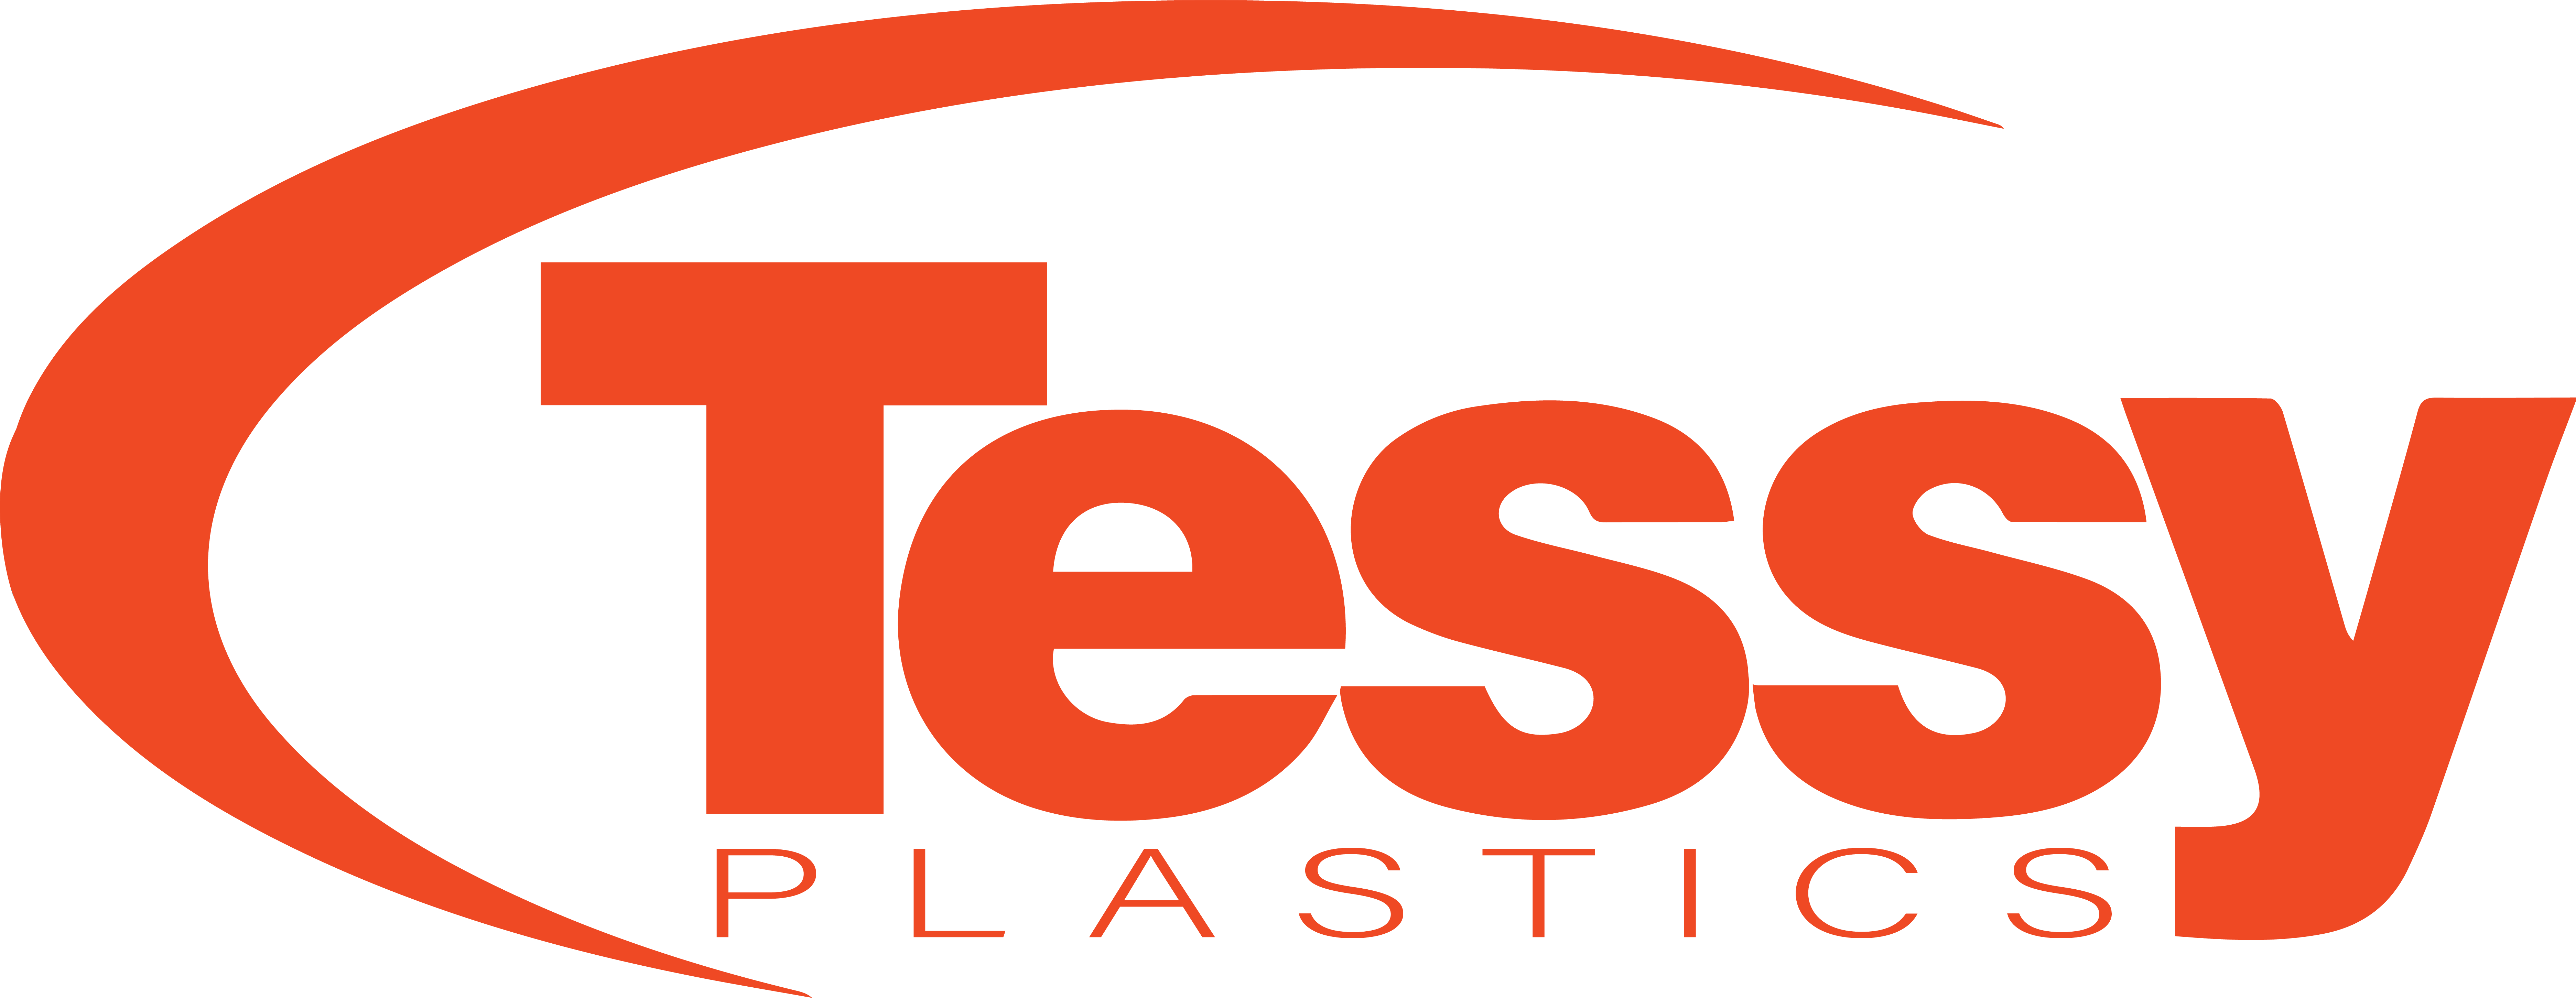 Tessy Plastics : 